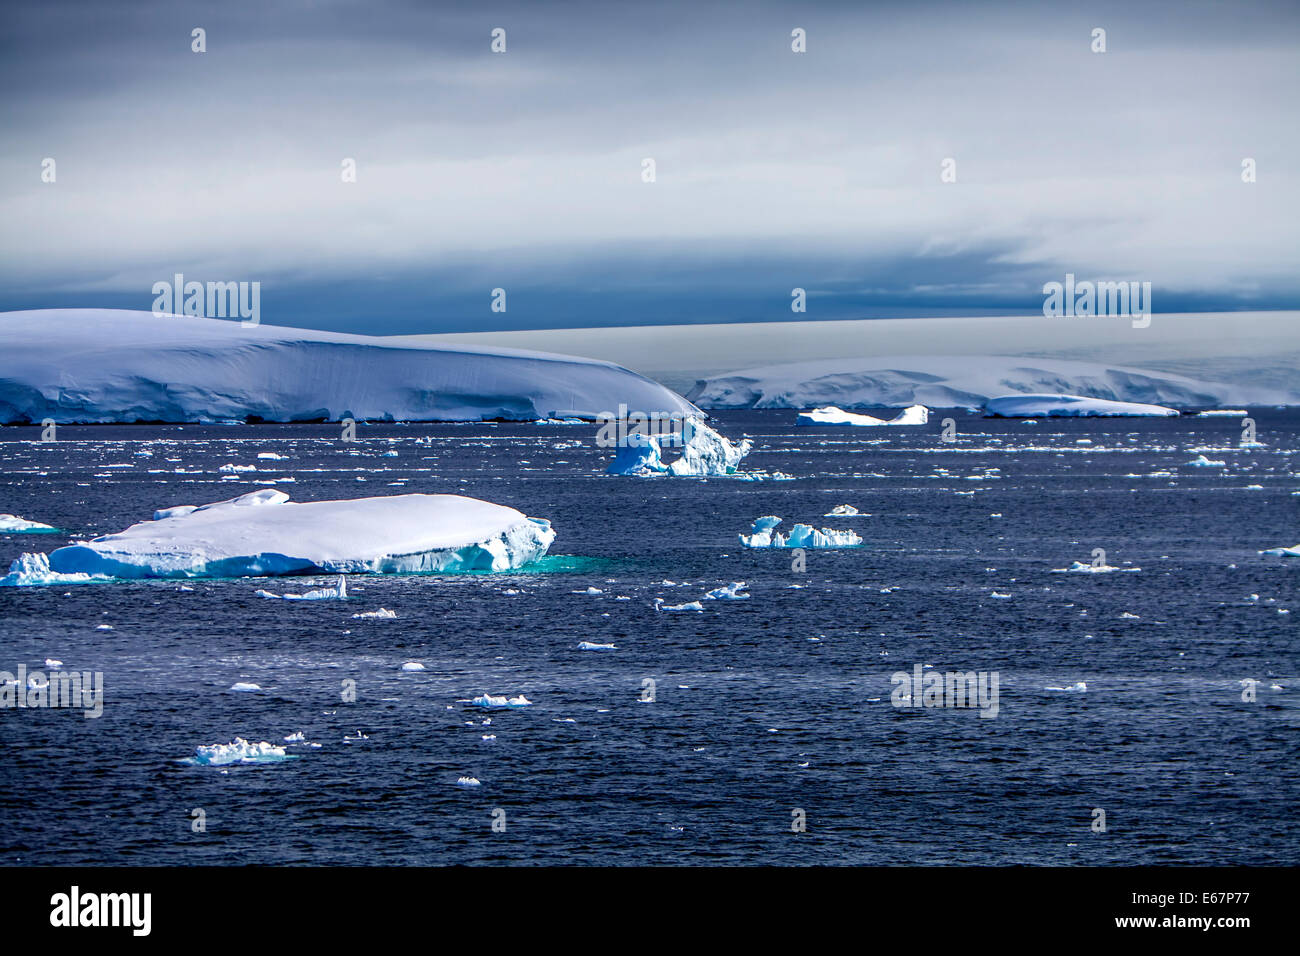 Antarktis Ozean mit Eislandschaft Stockfoto